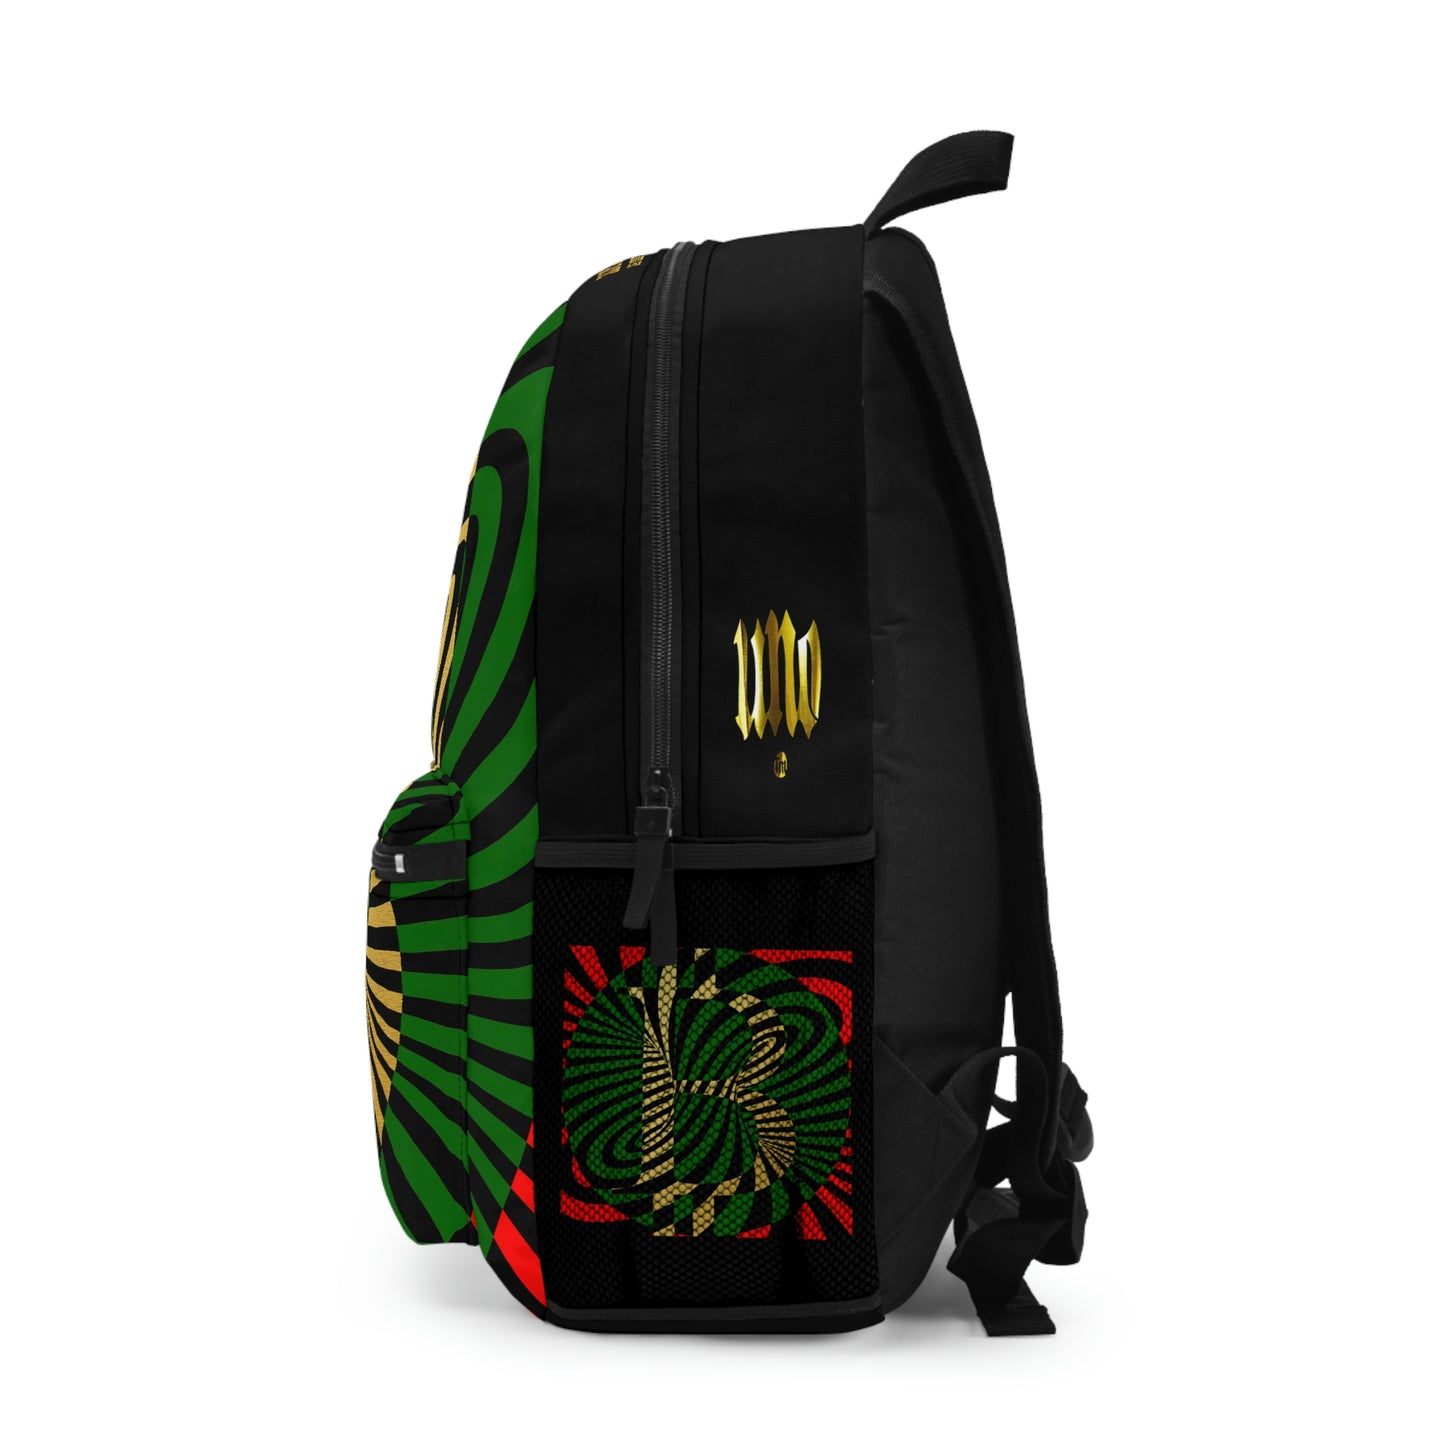 UNOBTCMAX Backpack